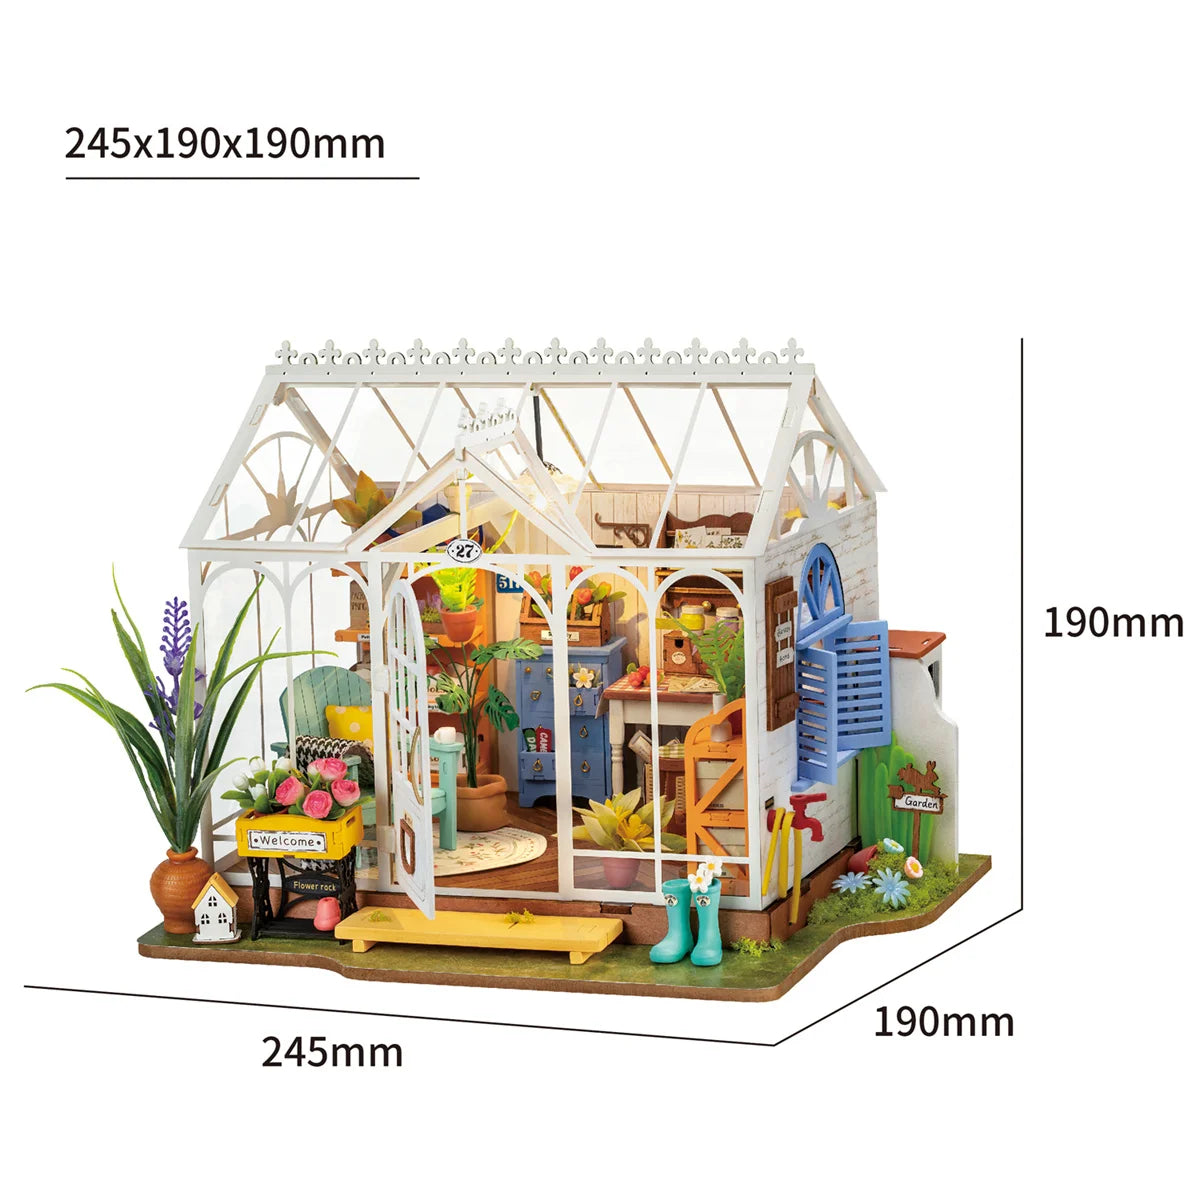 Robotime Rolife Dreamy Garden House DIY Dollhouse Miniature Mini House Wooden Kit Toy 3D Wooden Diorama Kit for Kids Robotime Online Store